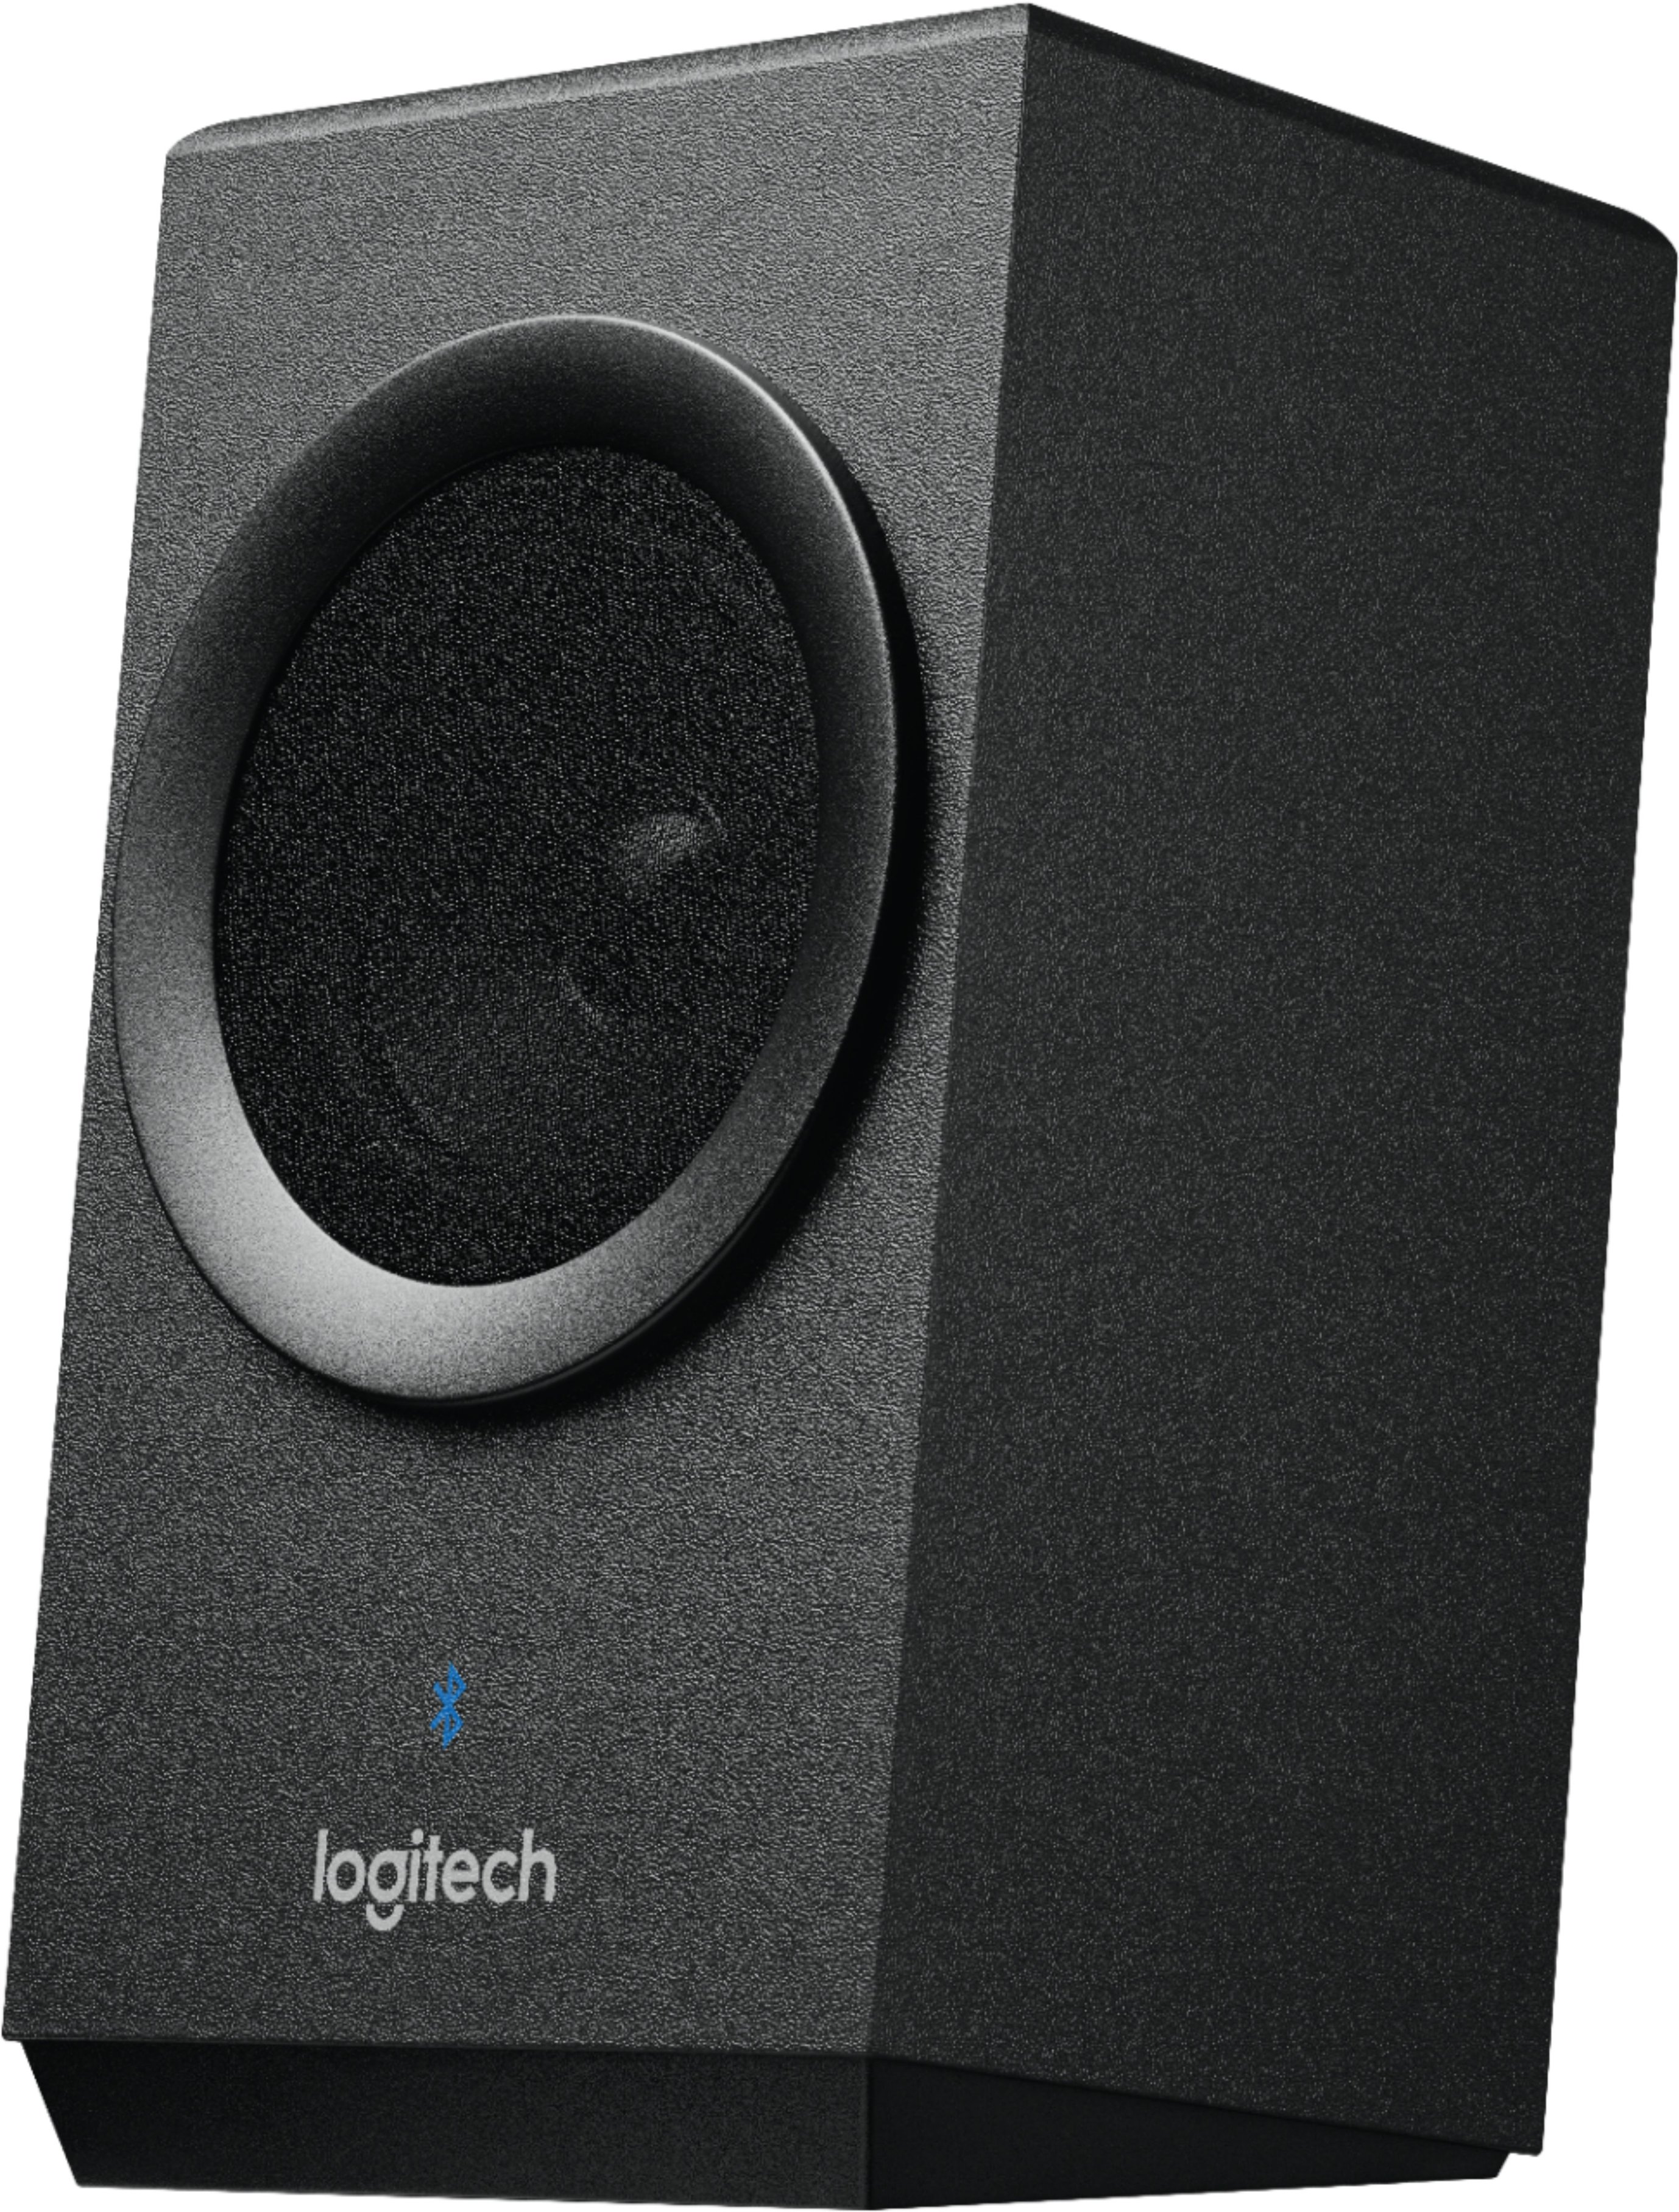 Logitech 2 1 Bluetooth Speaker System 3 Piece Black 980 Best Buy